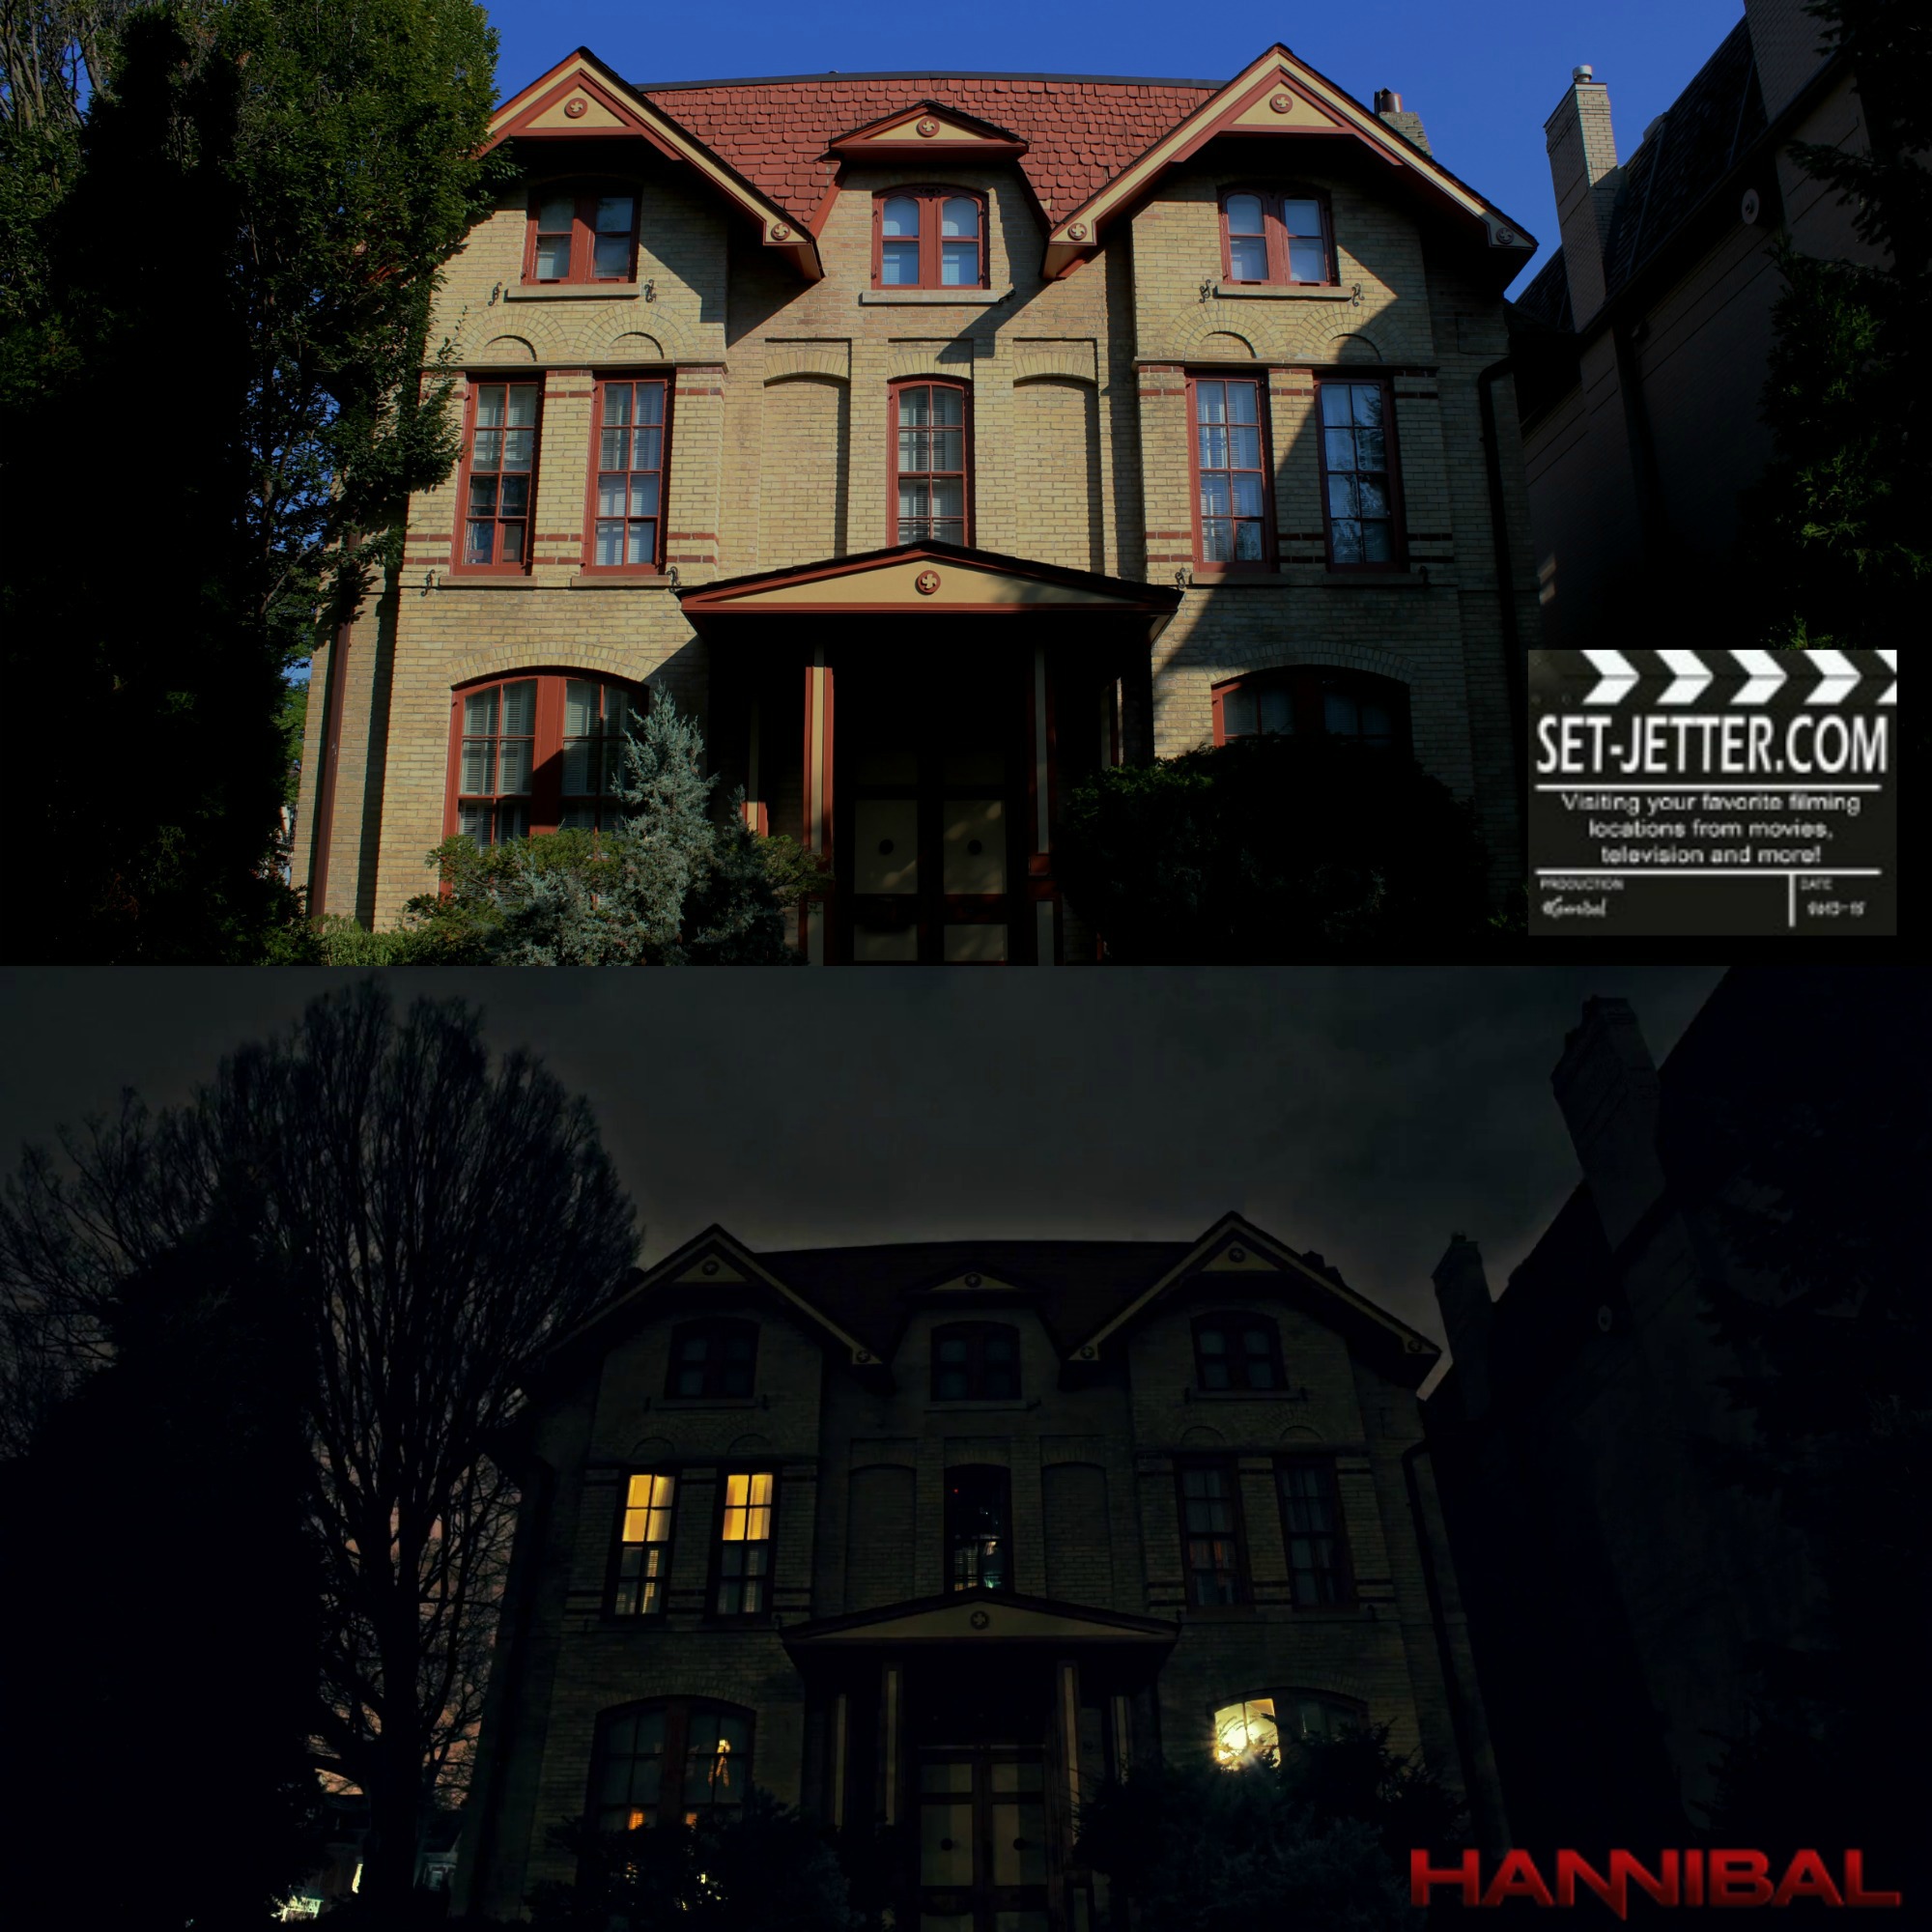 Hannibal house 05.jpg